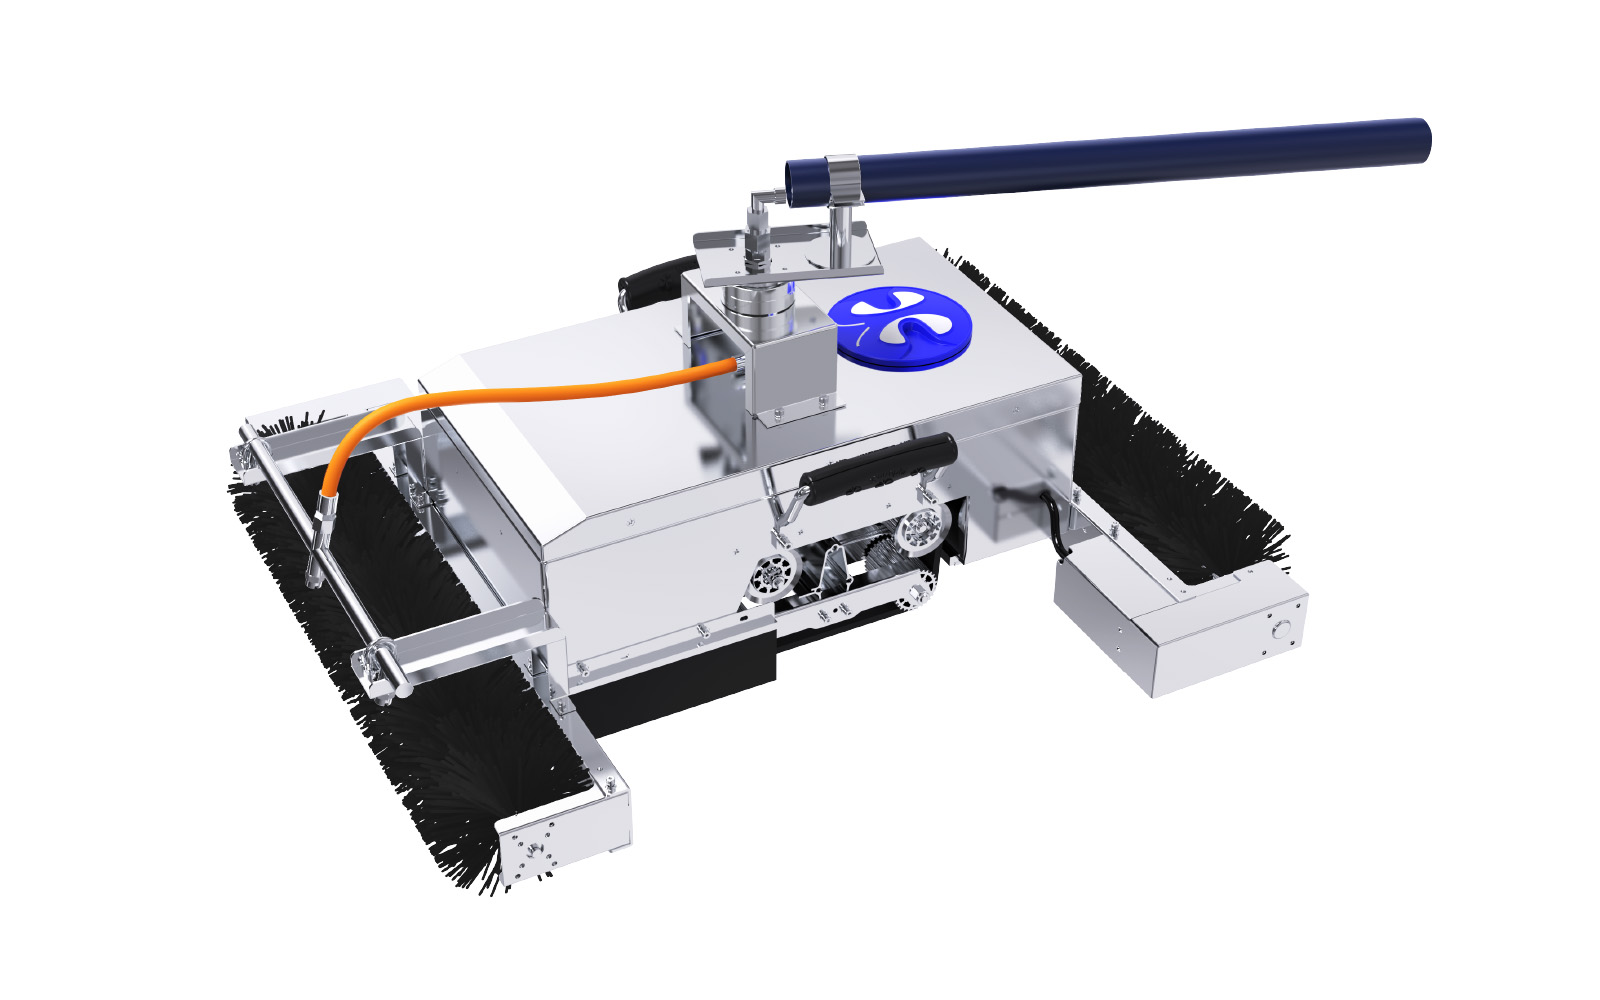 Fully autonomous PV cleaning robot,Kwun B10L2